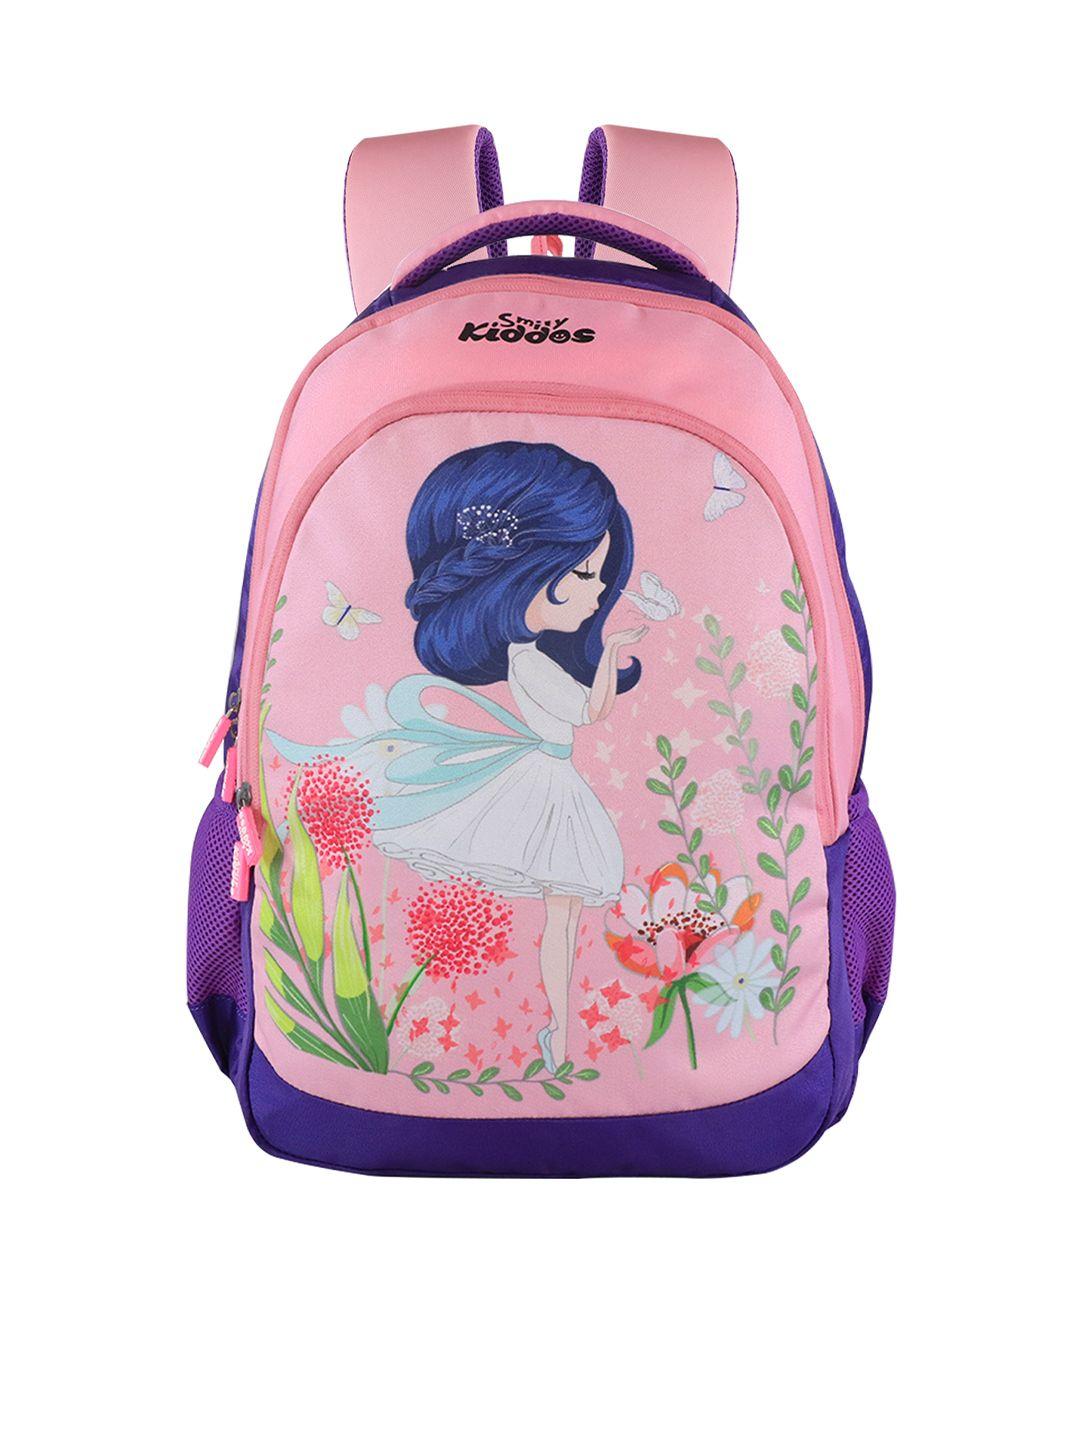 smily kiddos unisex kids pink backpacks